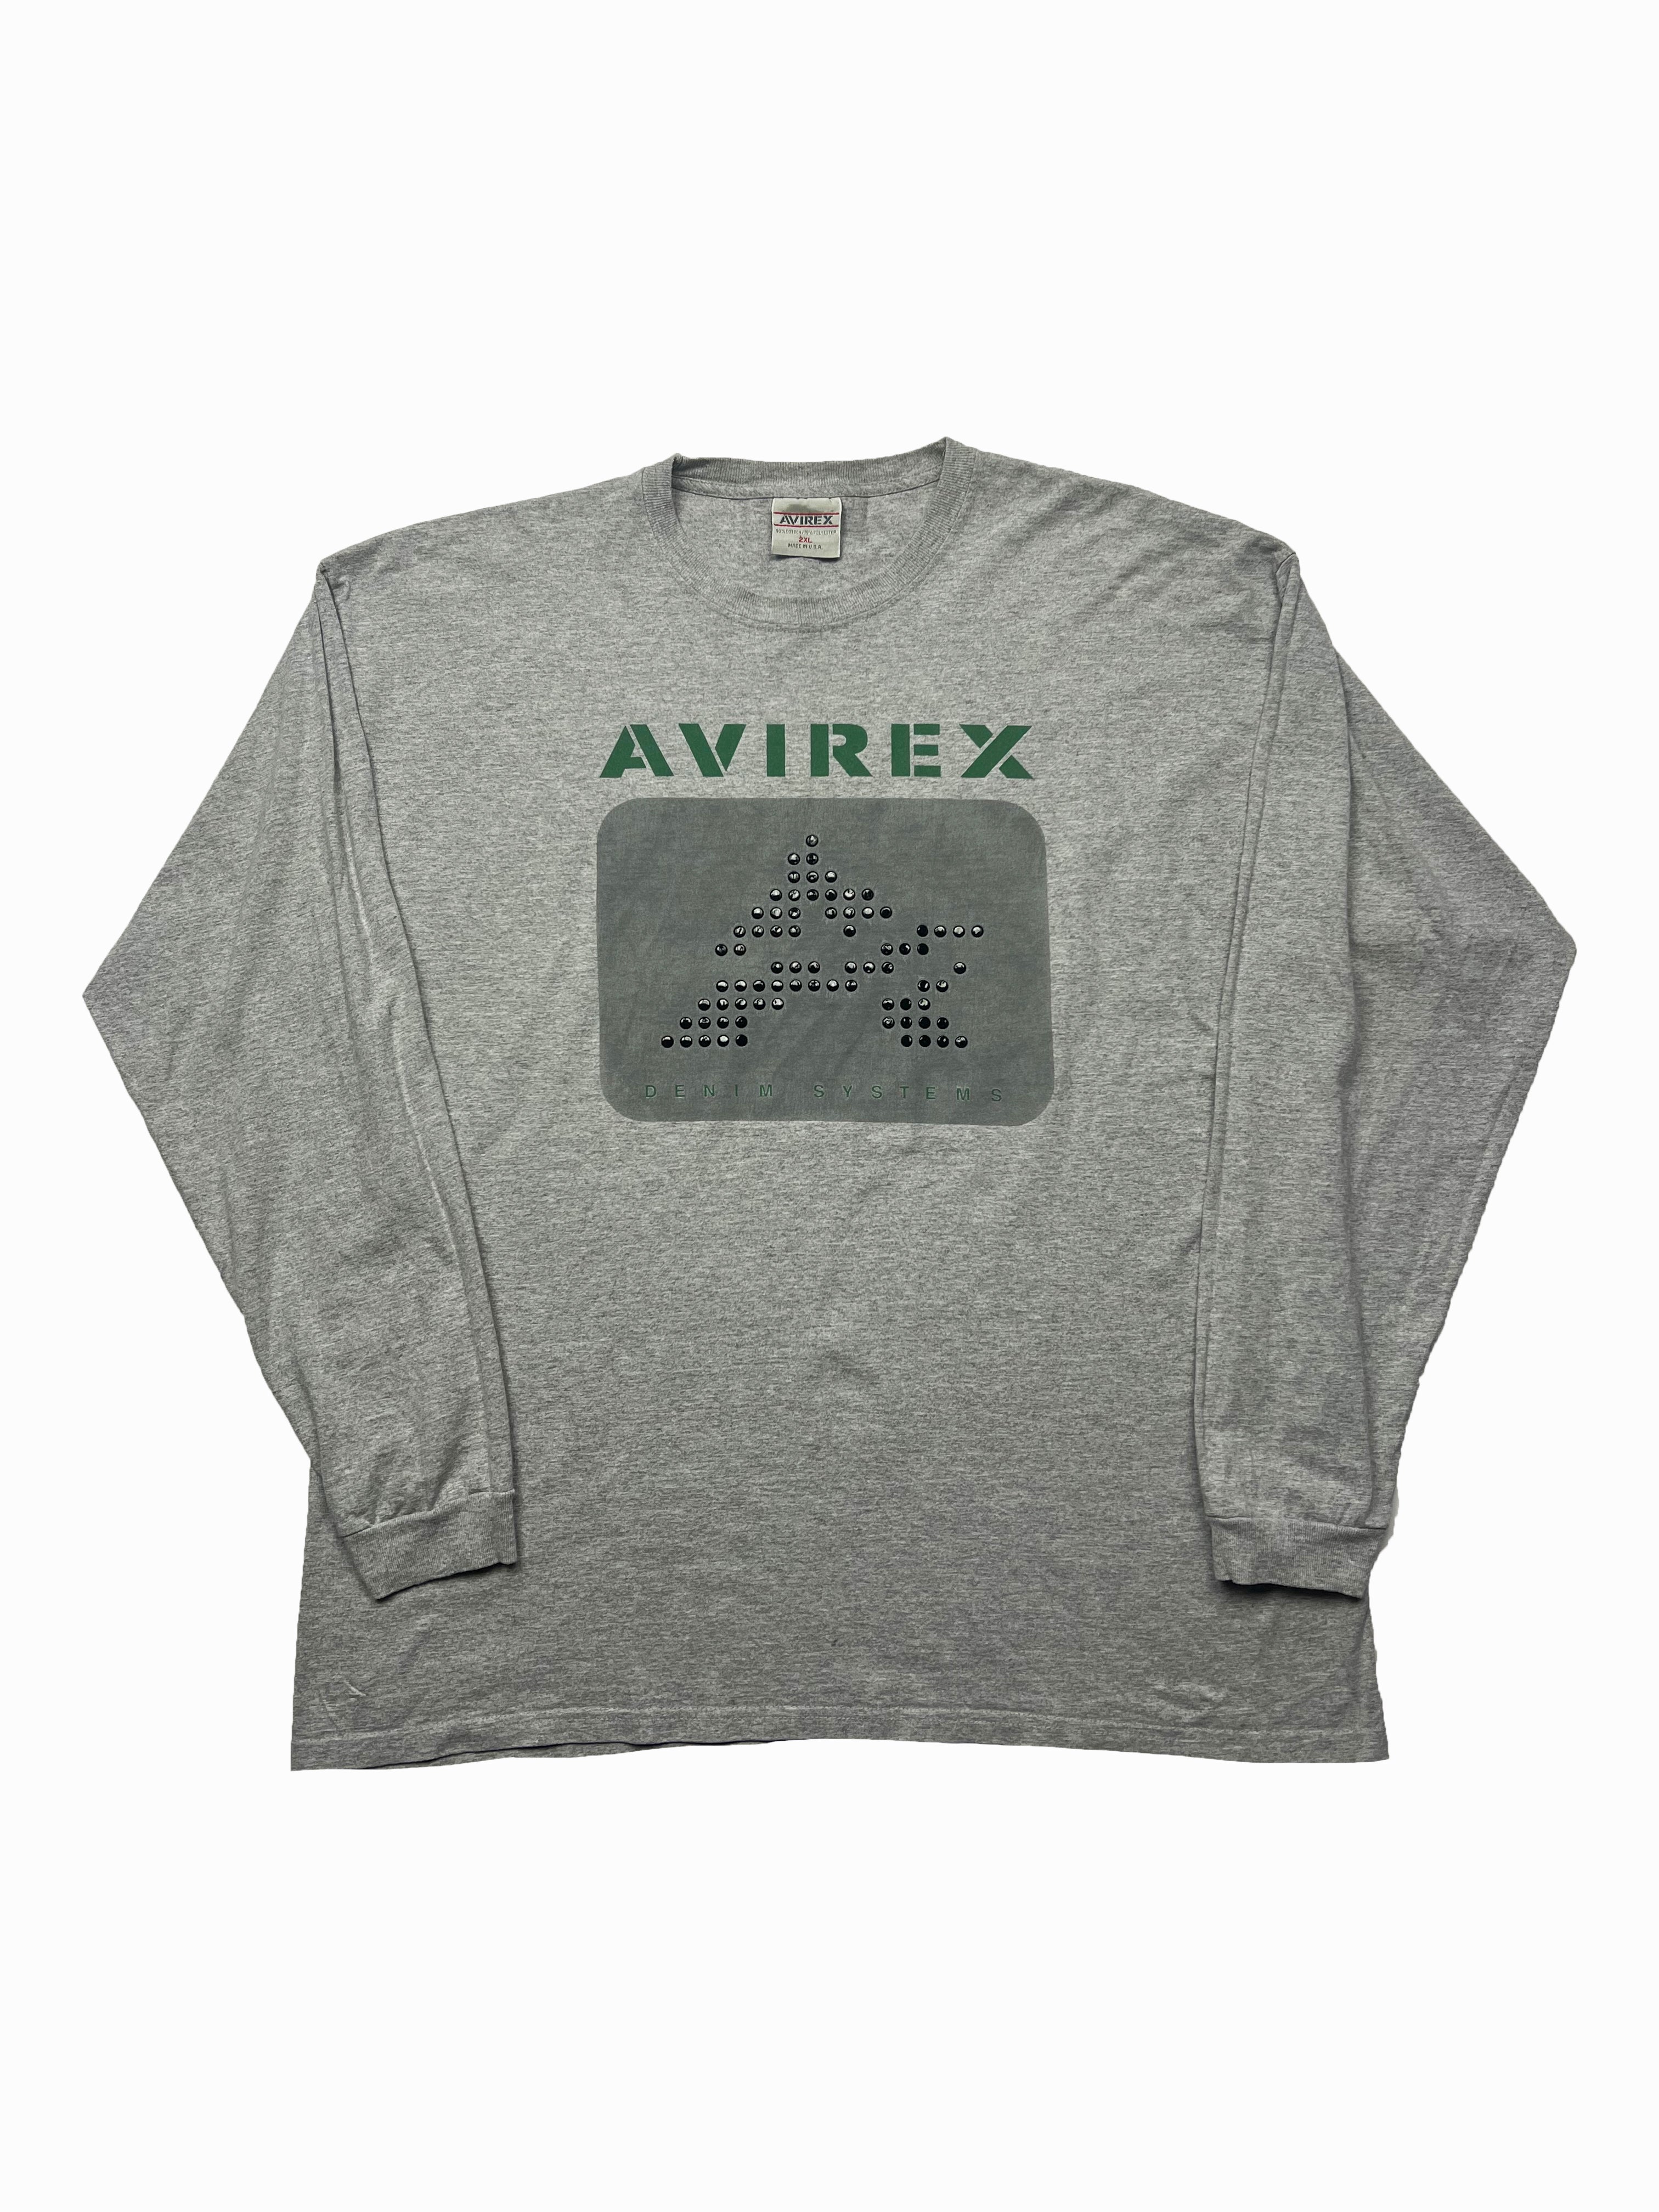 Avirex Grey Long Sleeve Spell Out T-shirt 90'sa